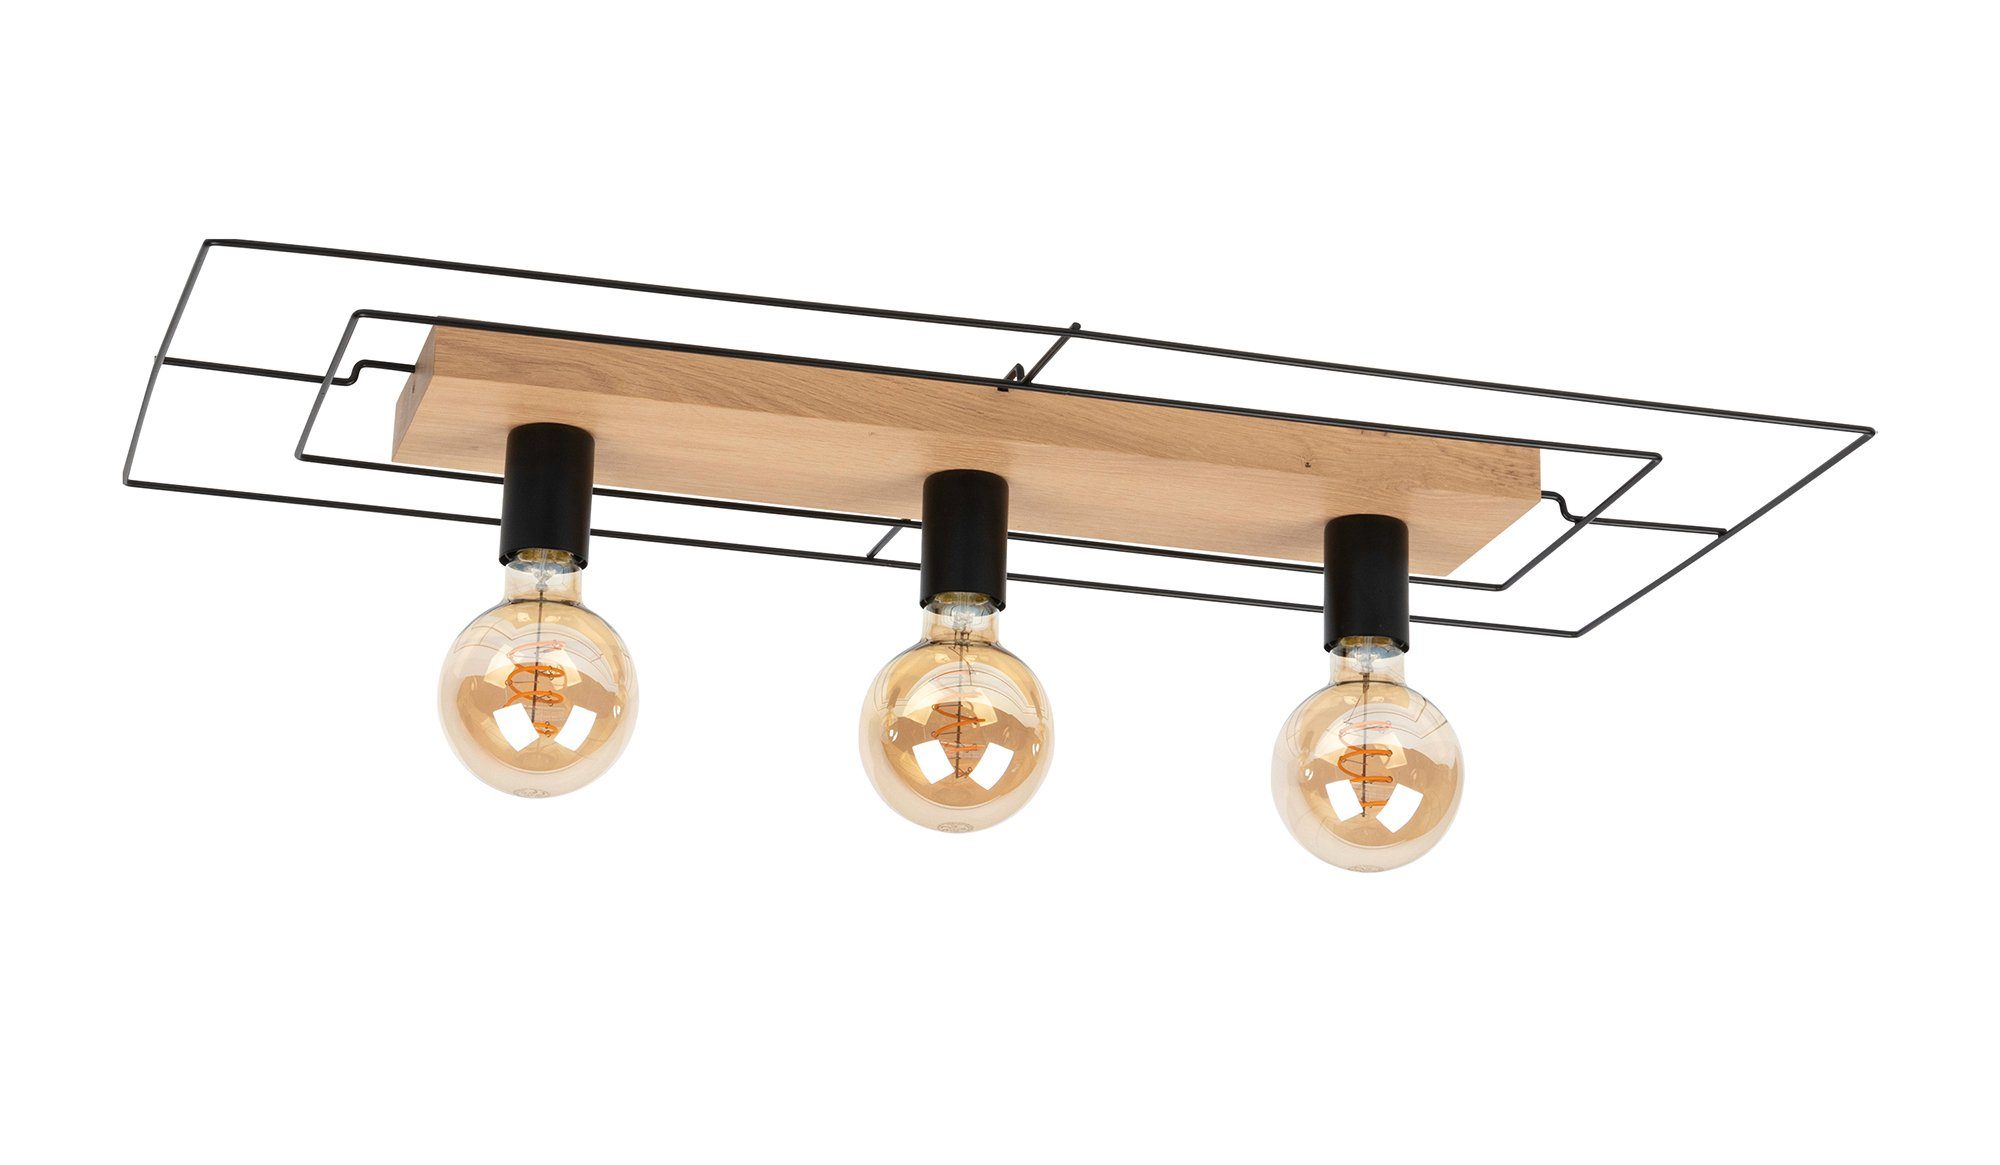 SPOT Light Plafondlamp CHESTER Modern design, van eikenhout en metaal, bijpassende LM E27 / exclusief, duurzaam, Made in Europe